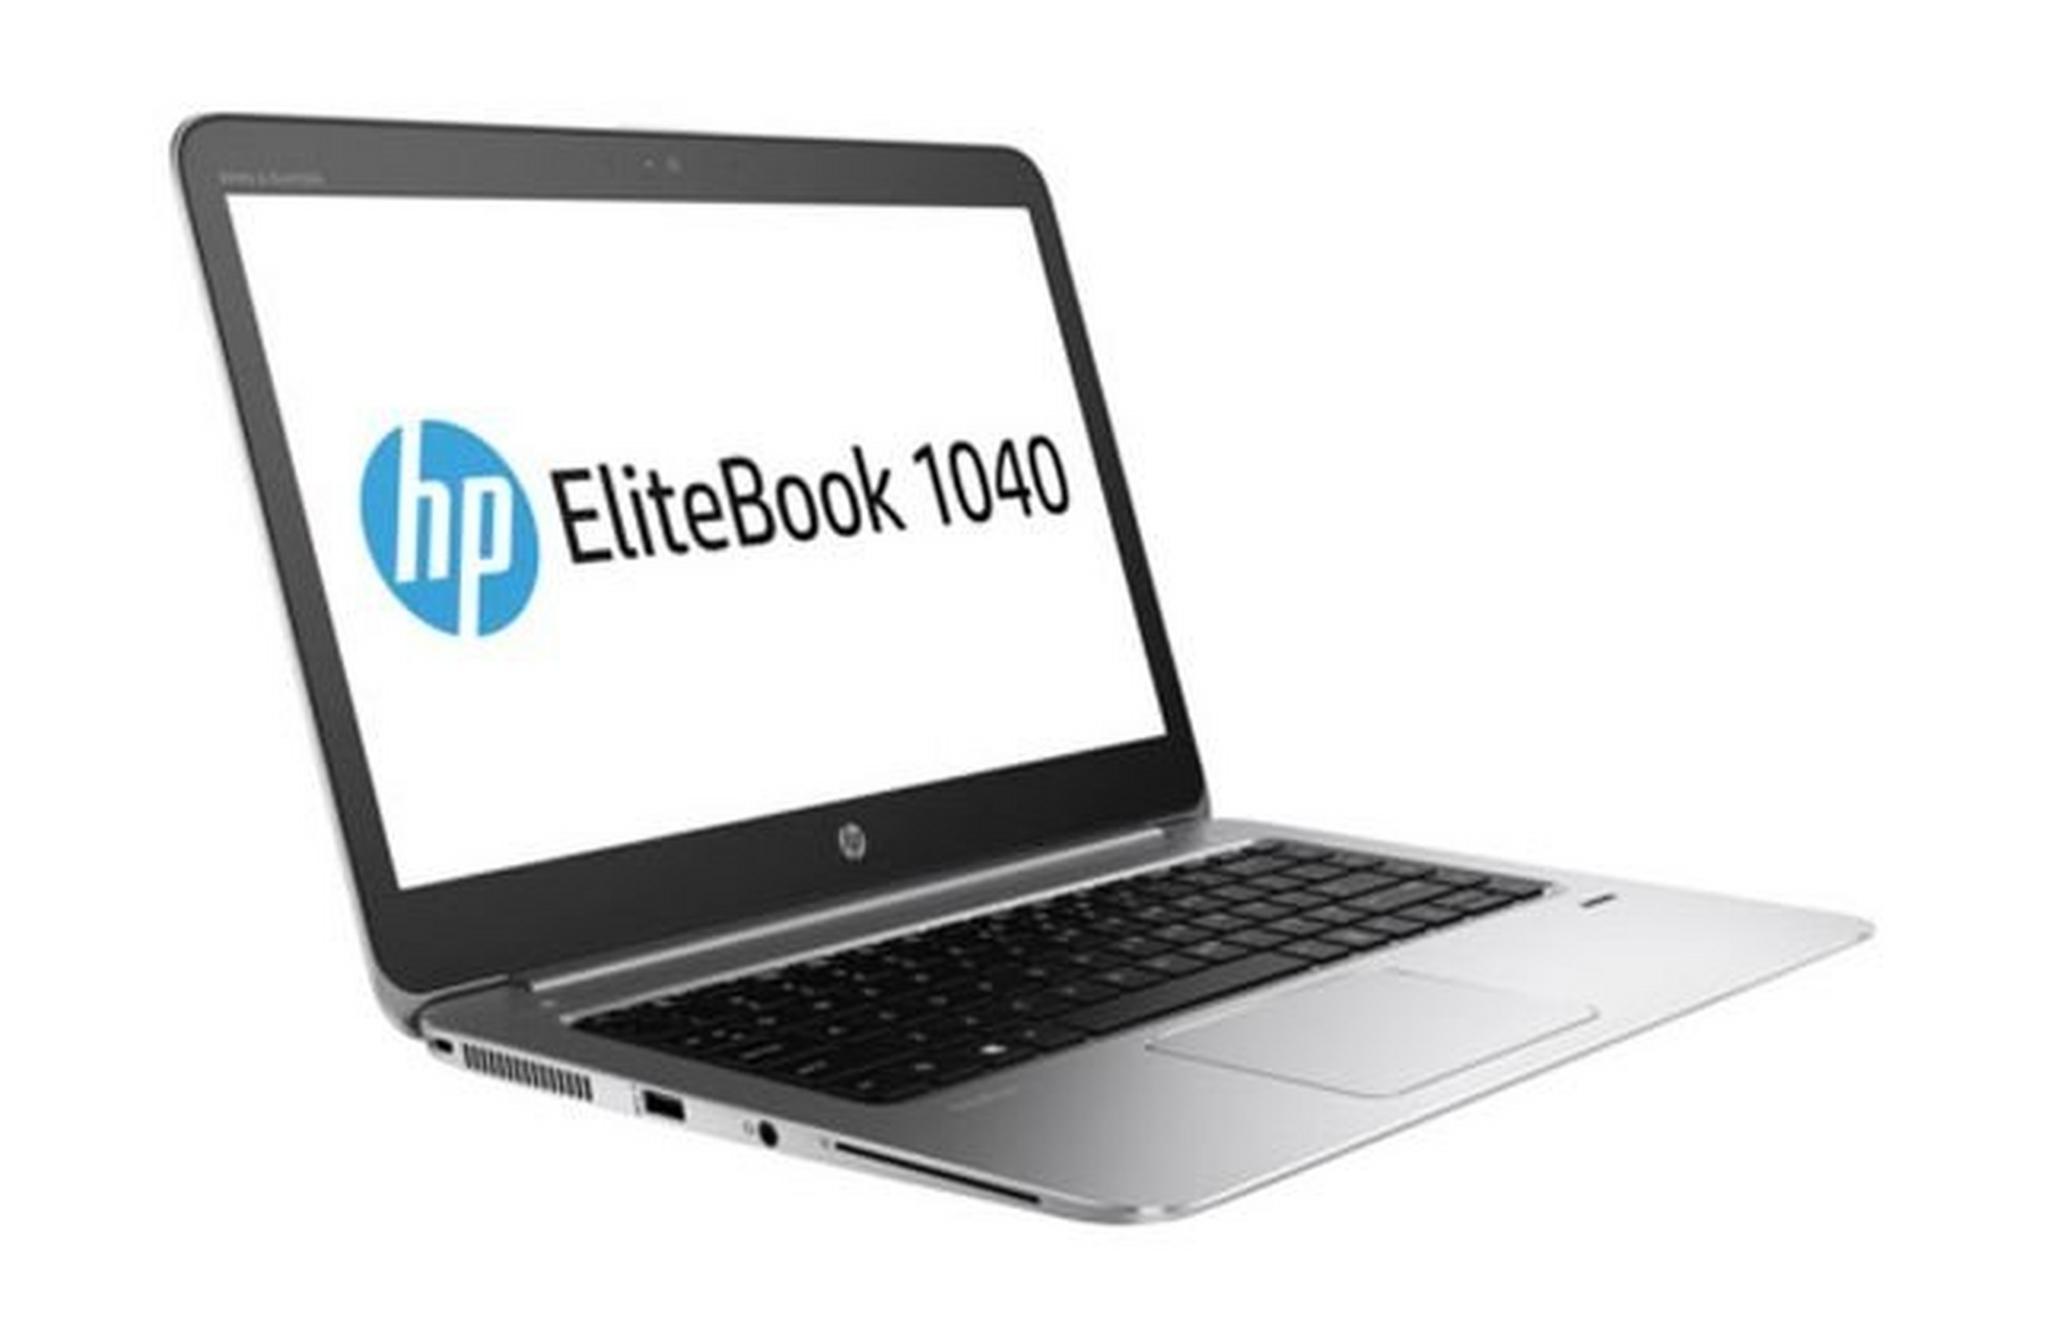 HP Elitebook 1040 Intel Core i7 16GB RAM 256GB SSD 14" Laptop - Silver